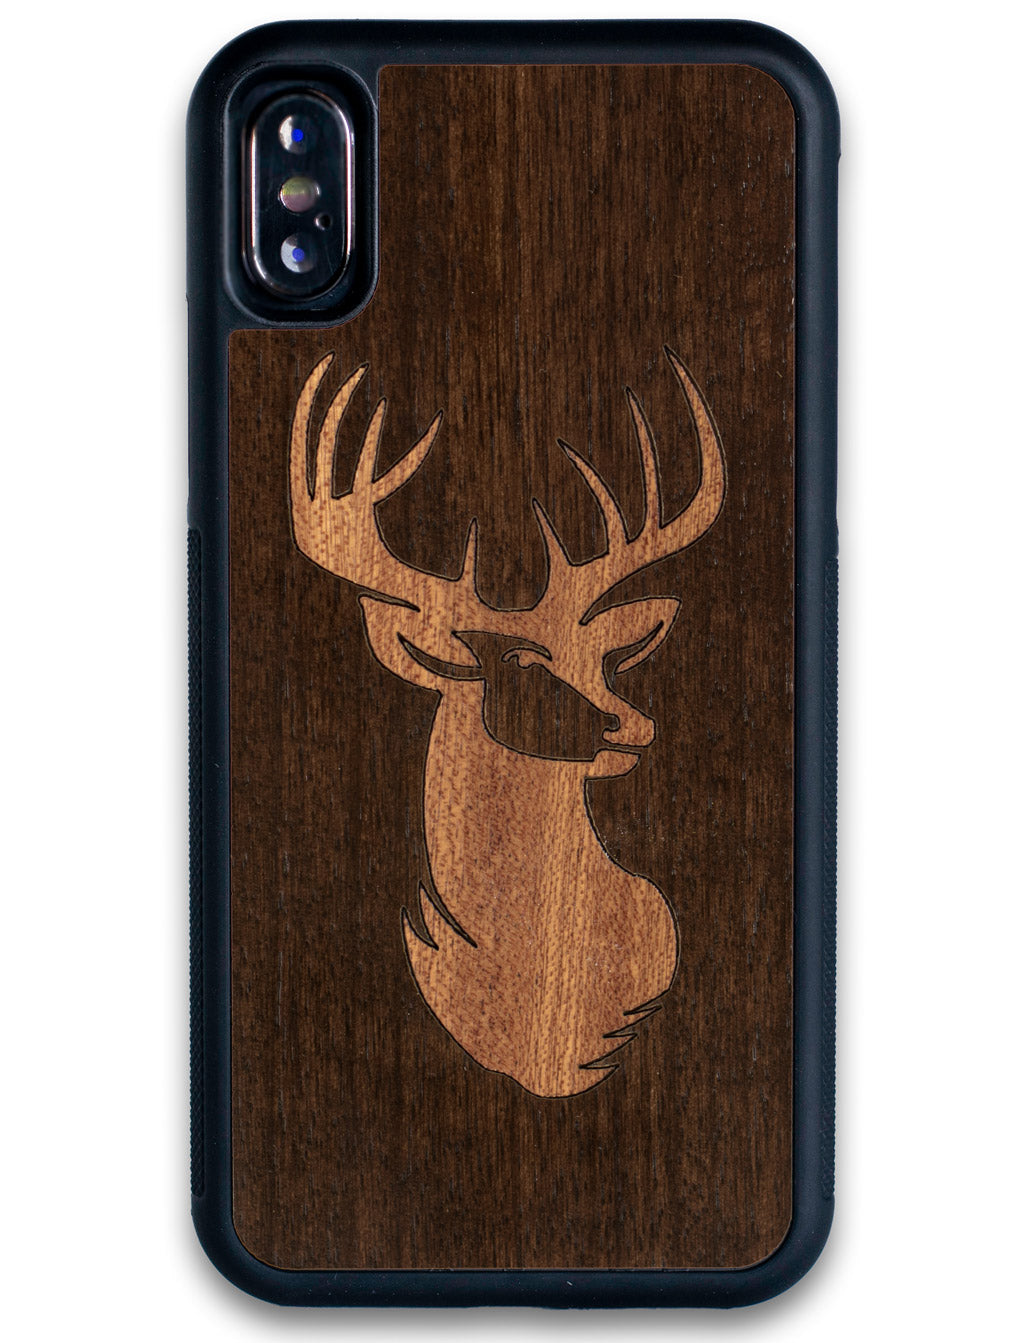 Mule Deer iPhone X/Xs case